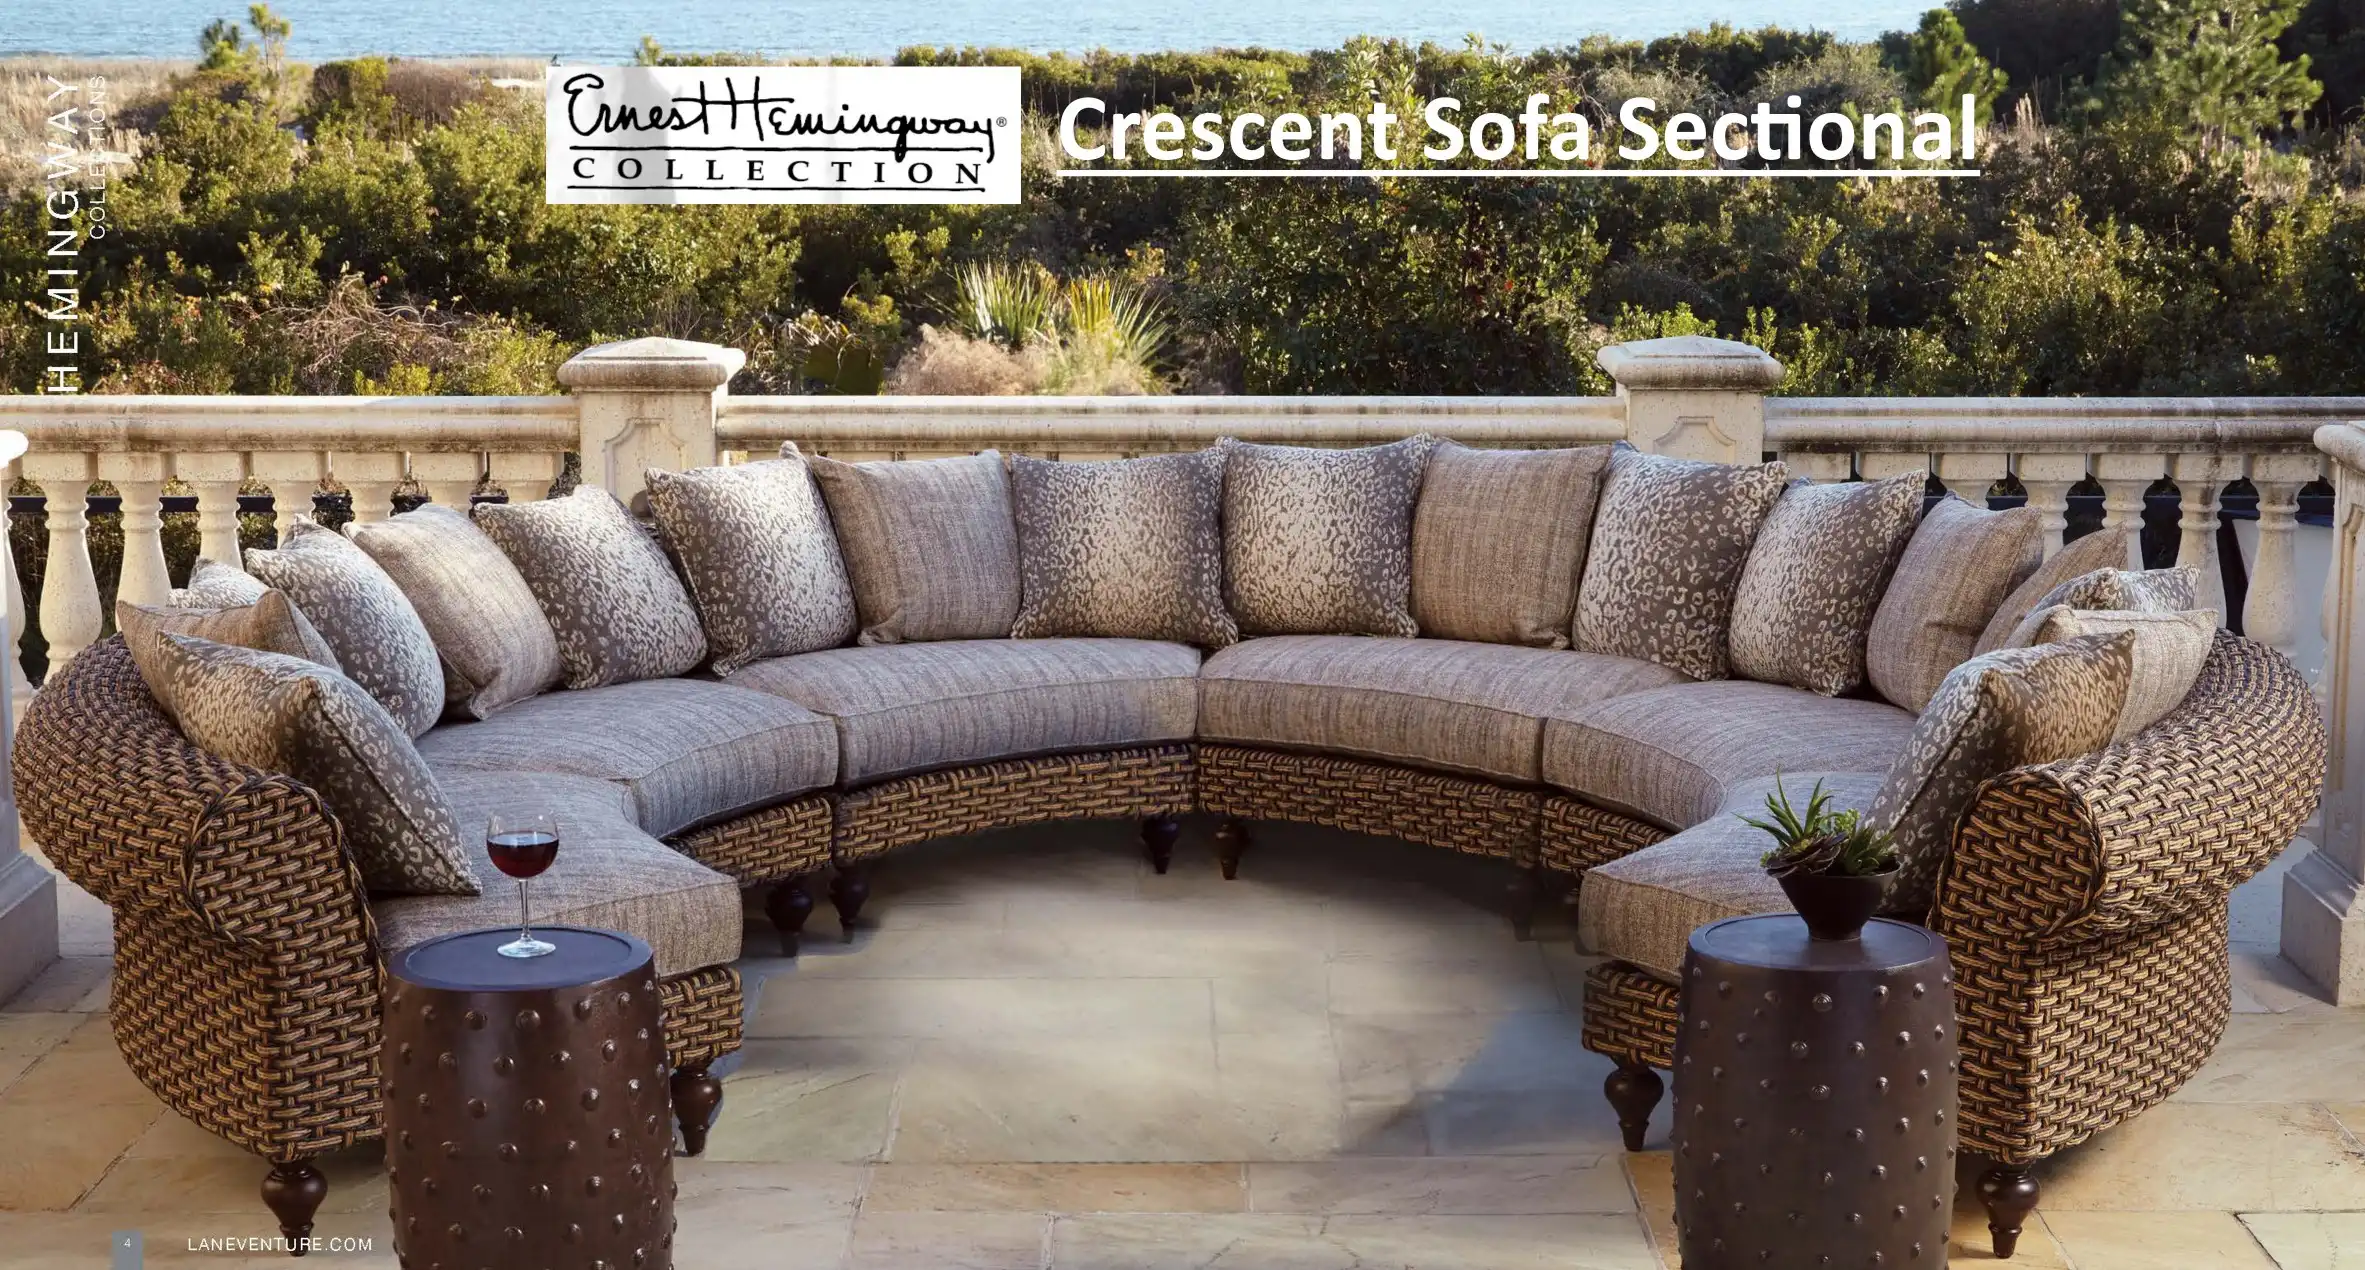 ERNEST HEMINGWAY Crescent Sofa Sectional by Lane Venture